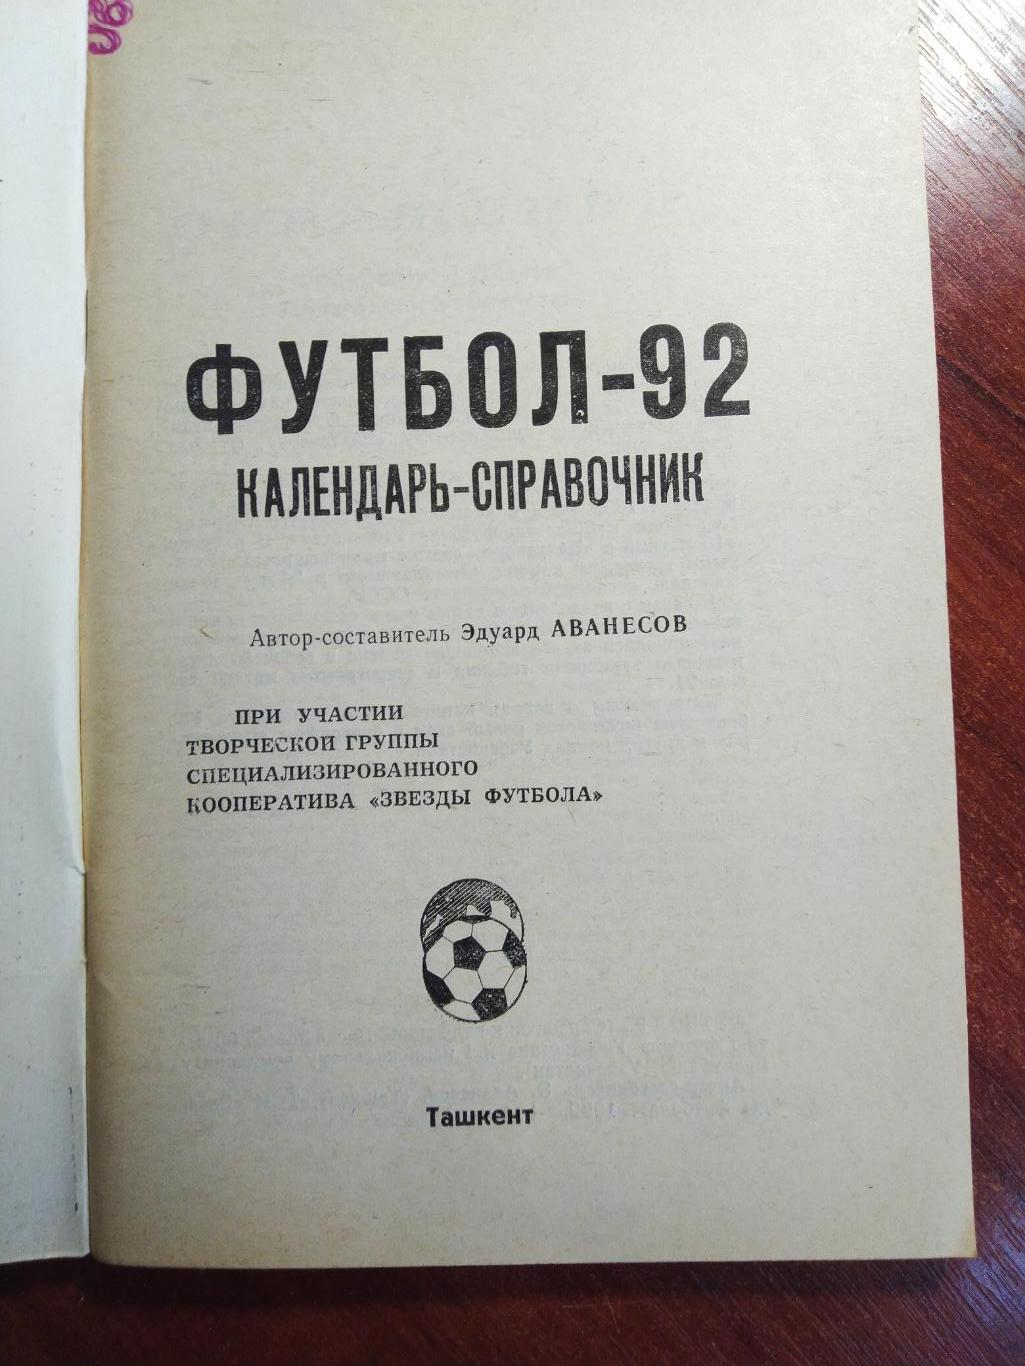 Справочник -календарь Футбол 1992 Ташкент 1